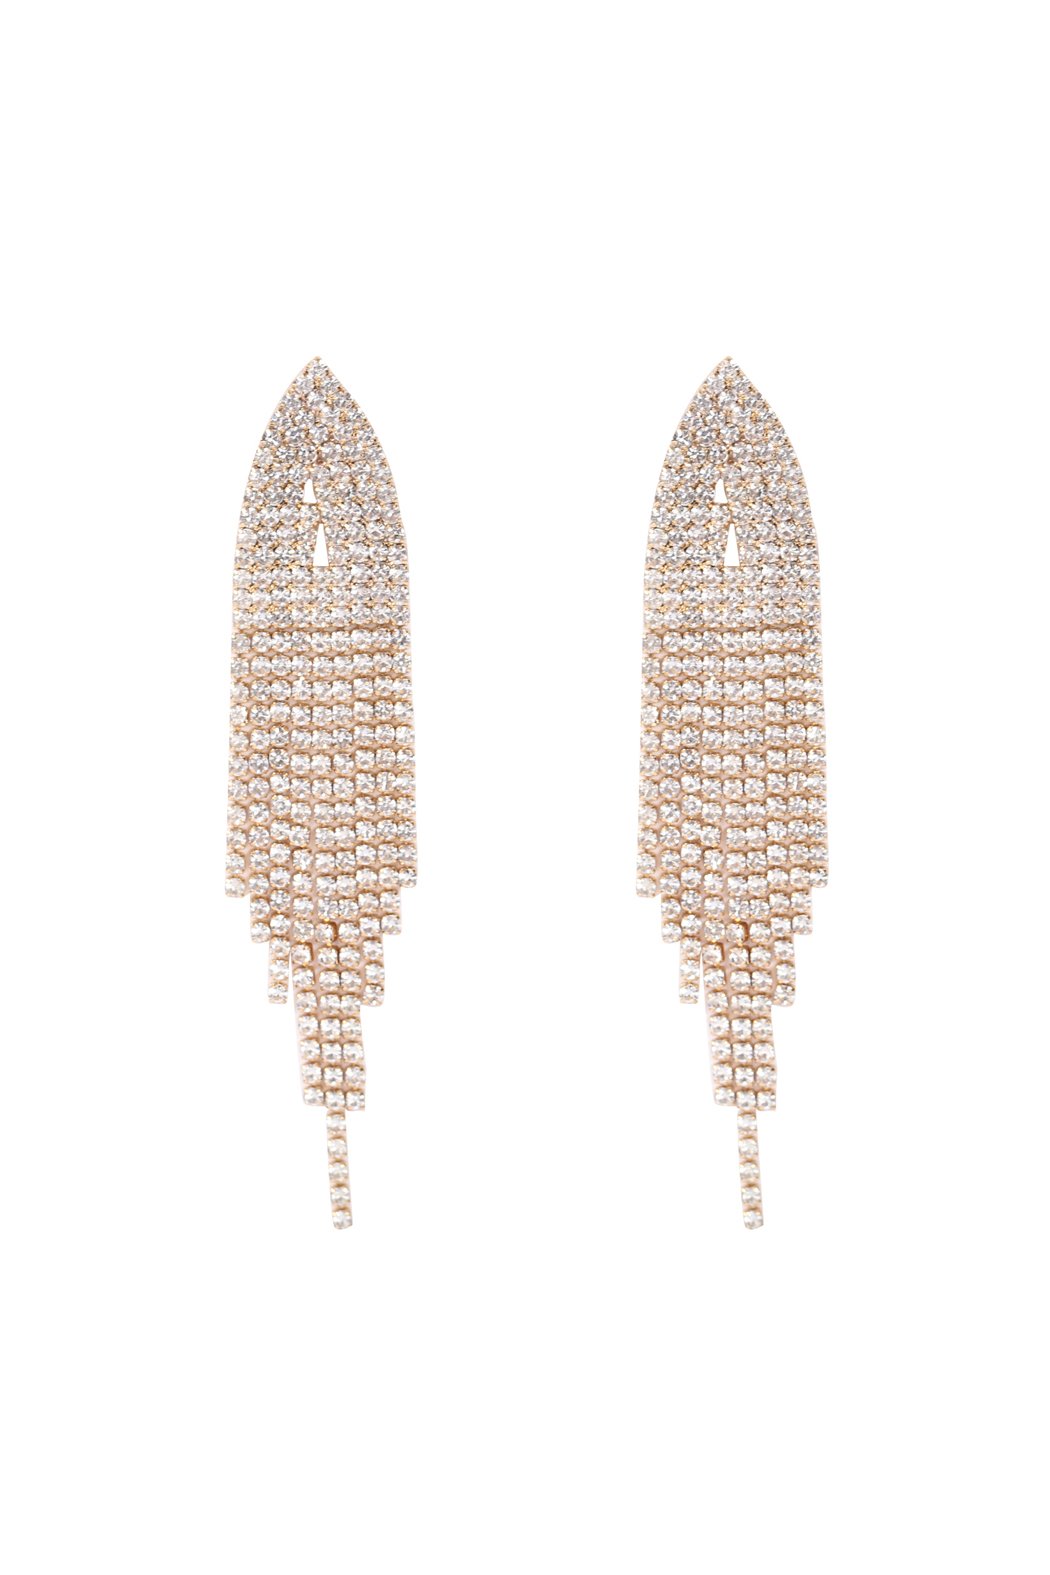 Mye1179 - Bridal Rhinestone Long Tassel Earrings